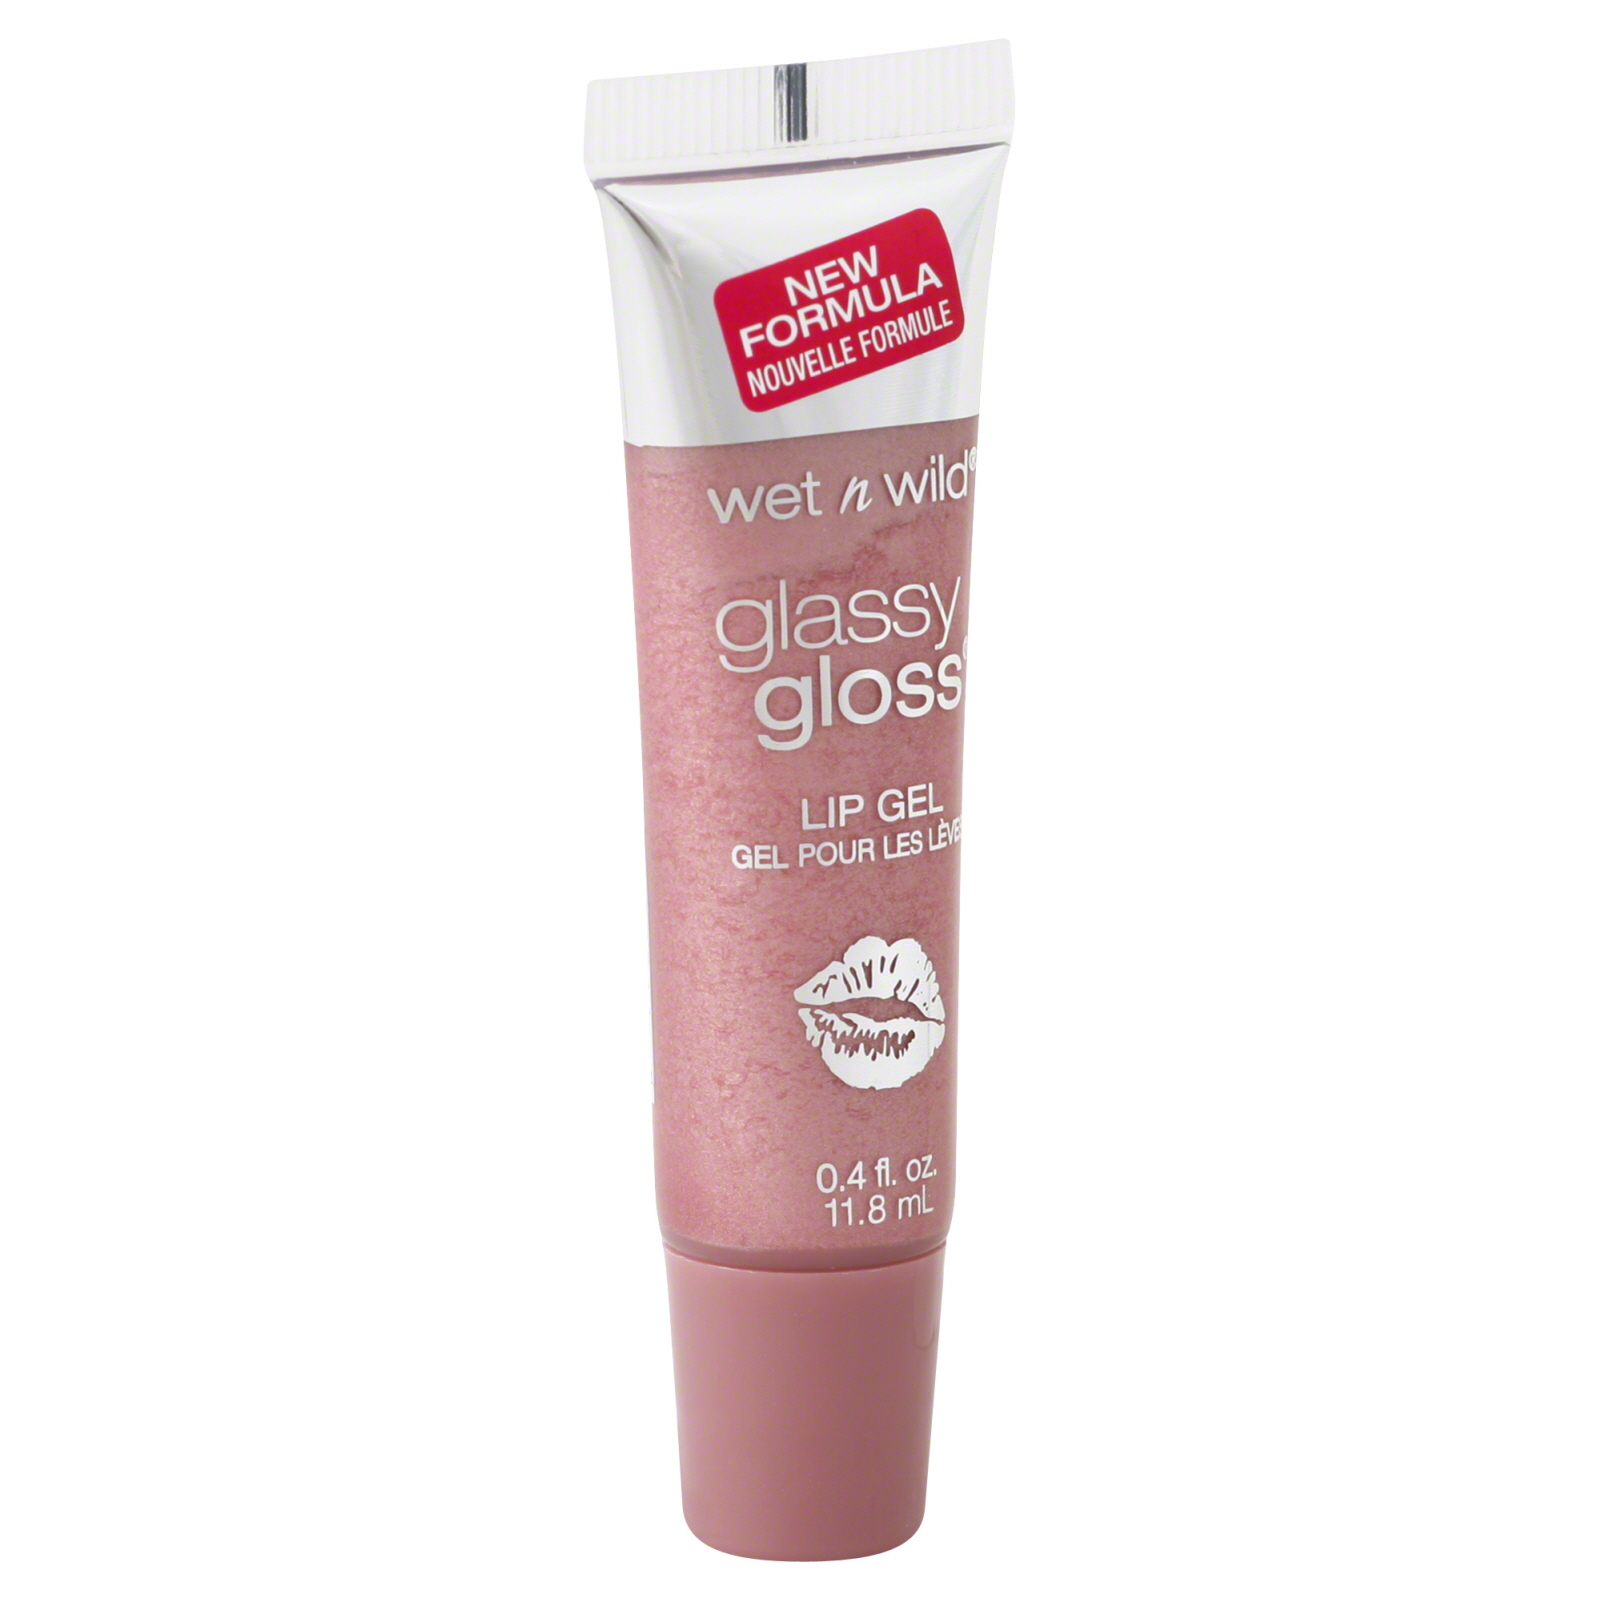 Glassy Gloss Lip Gel, Glass Confusion 311A, 0.4 fl oz (11.8 ml)